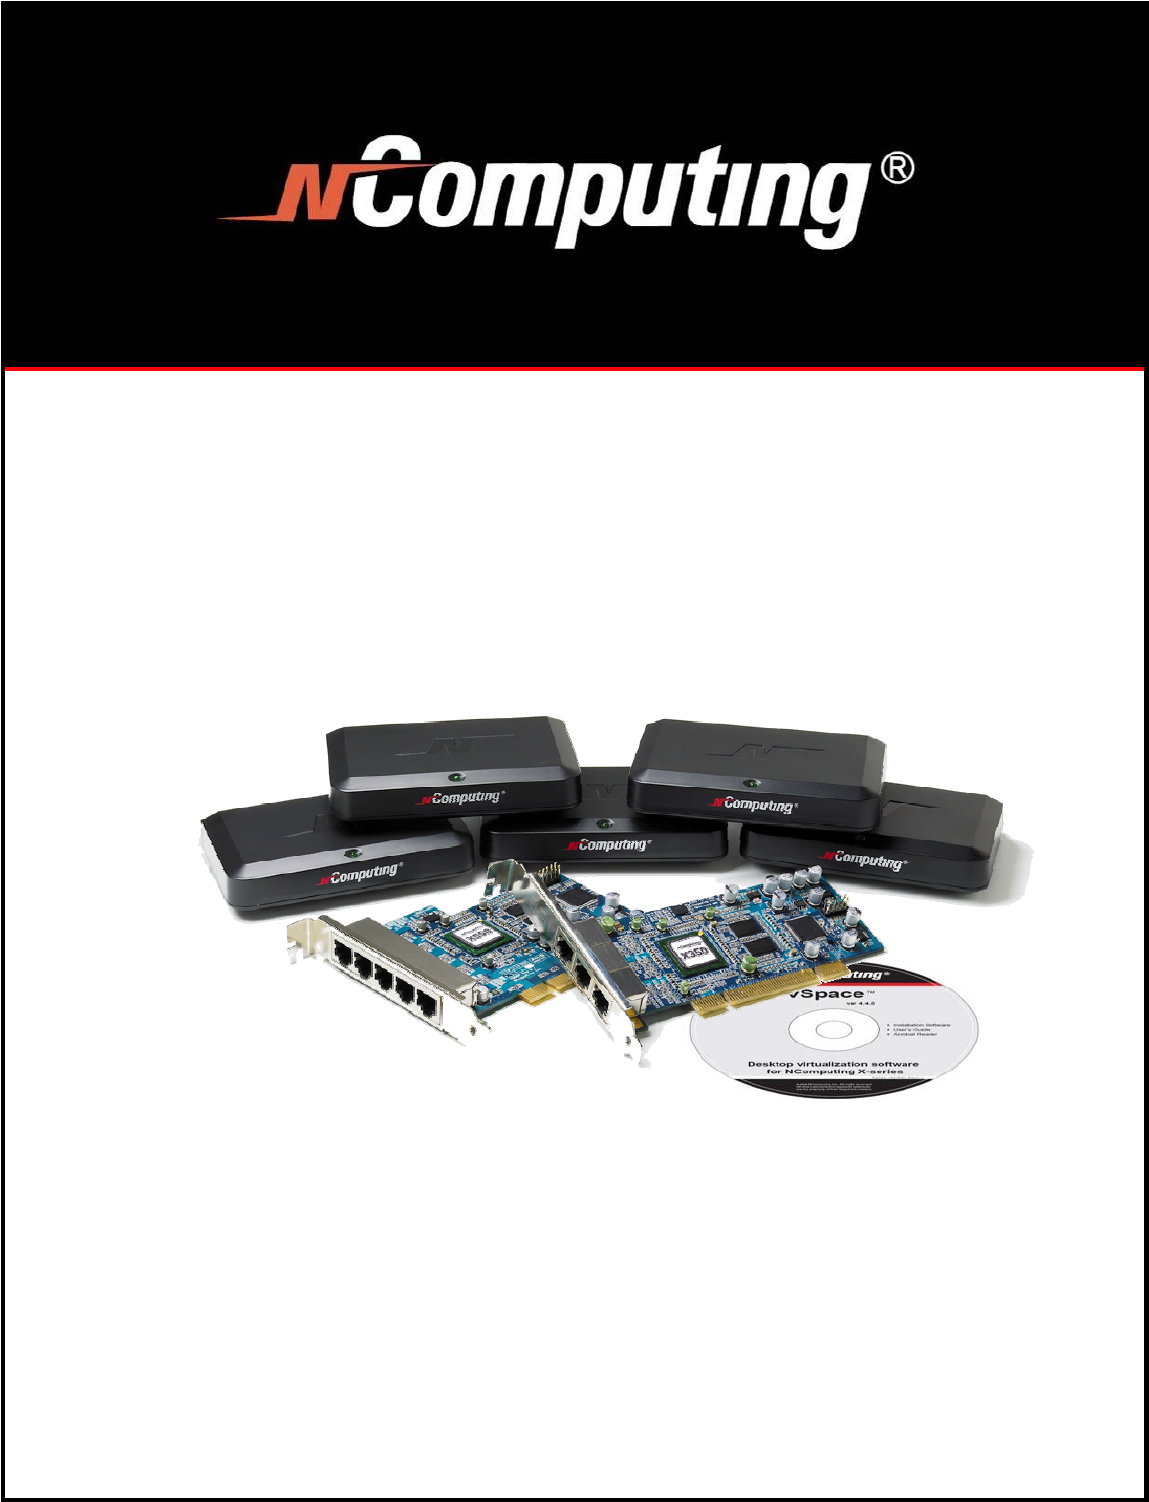 Ncomputing x550 pci card driver download windows 7 32bitit